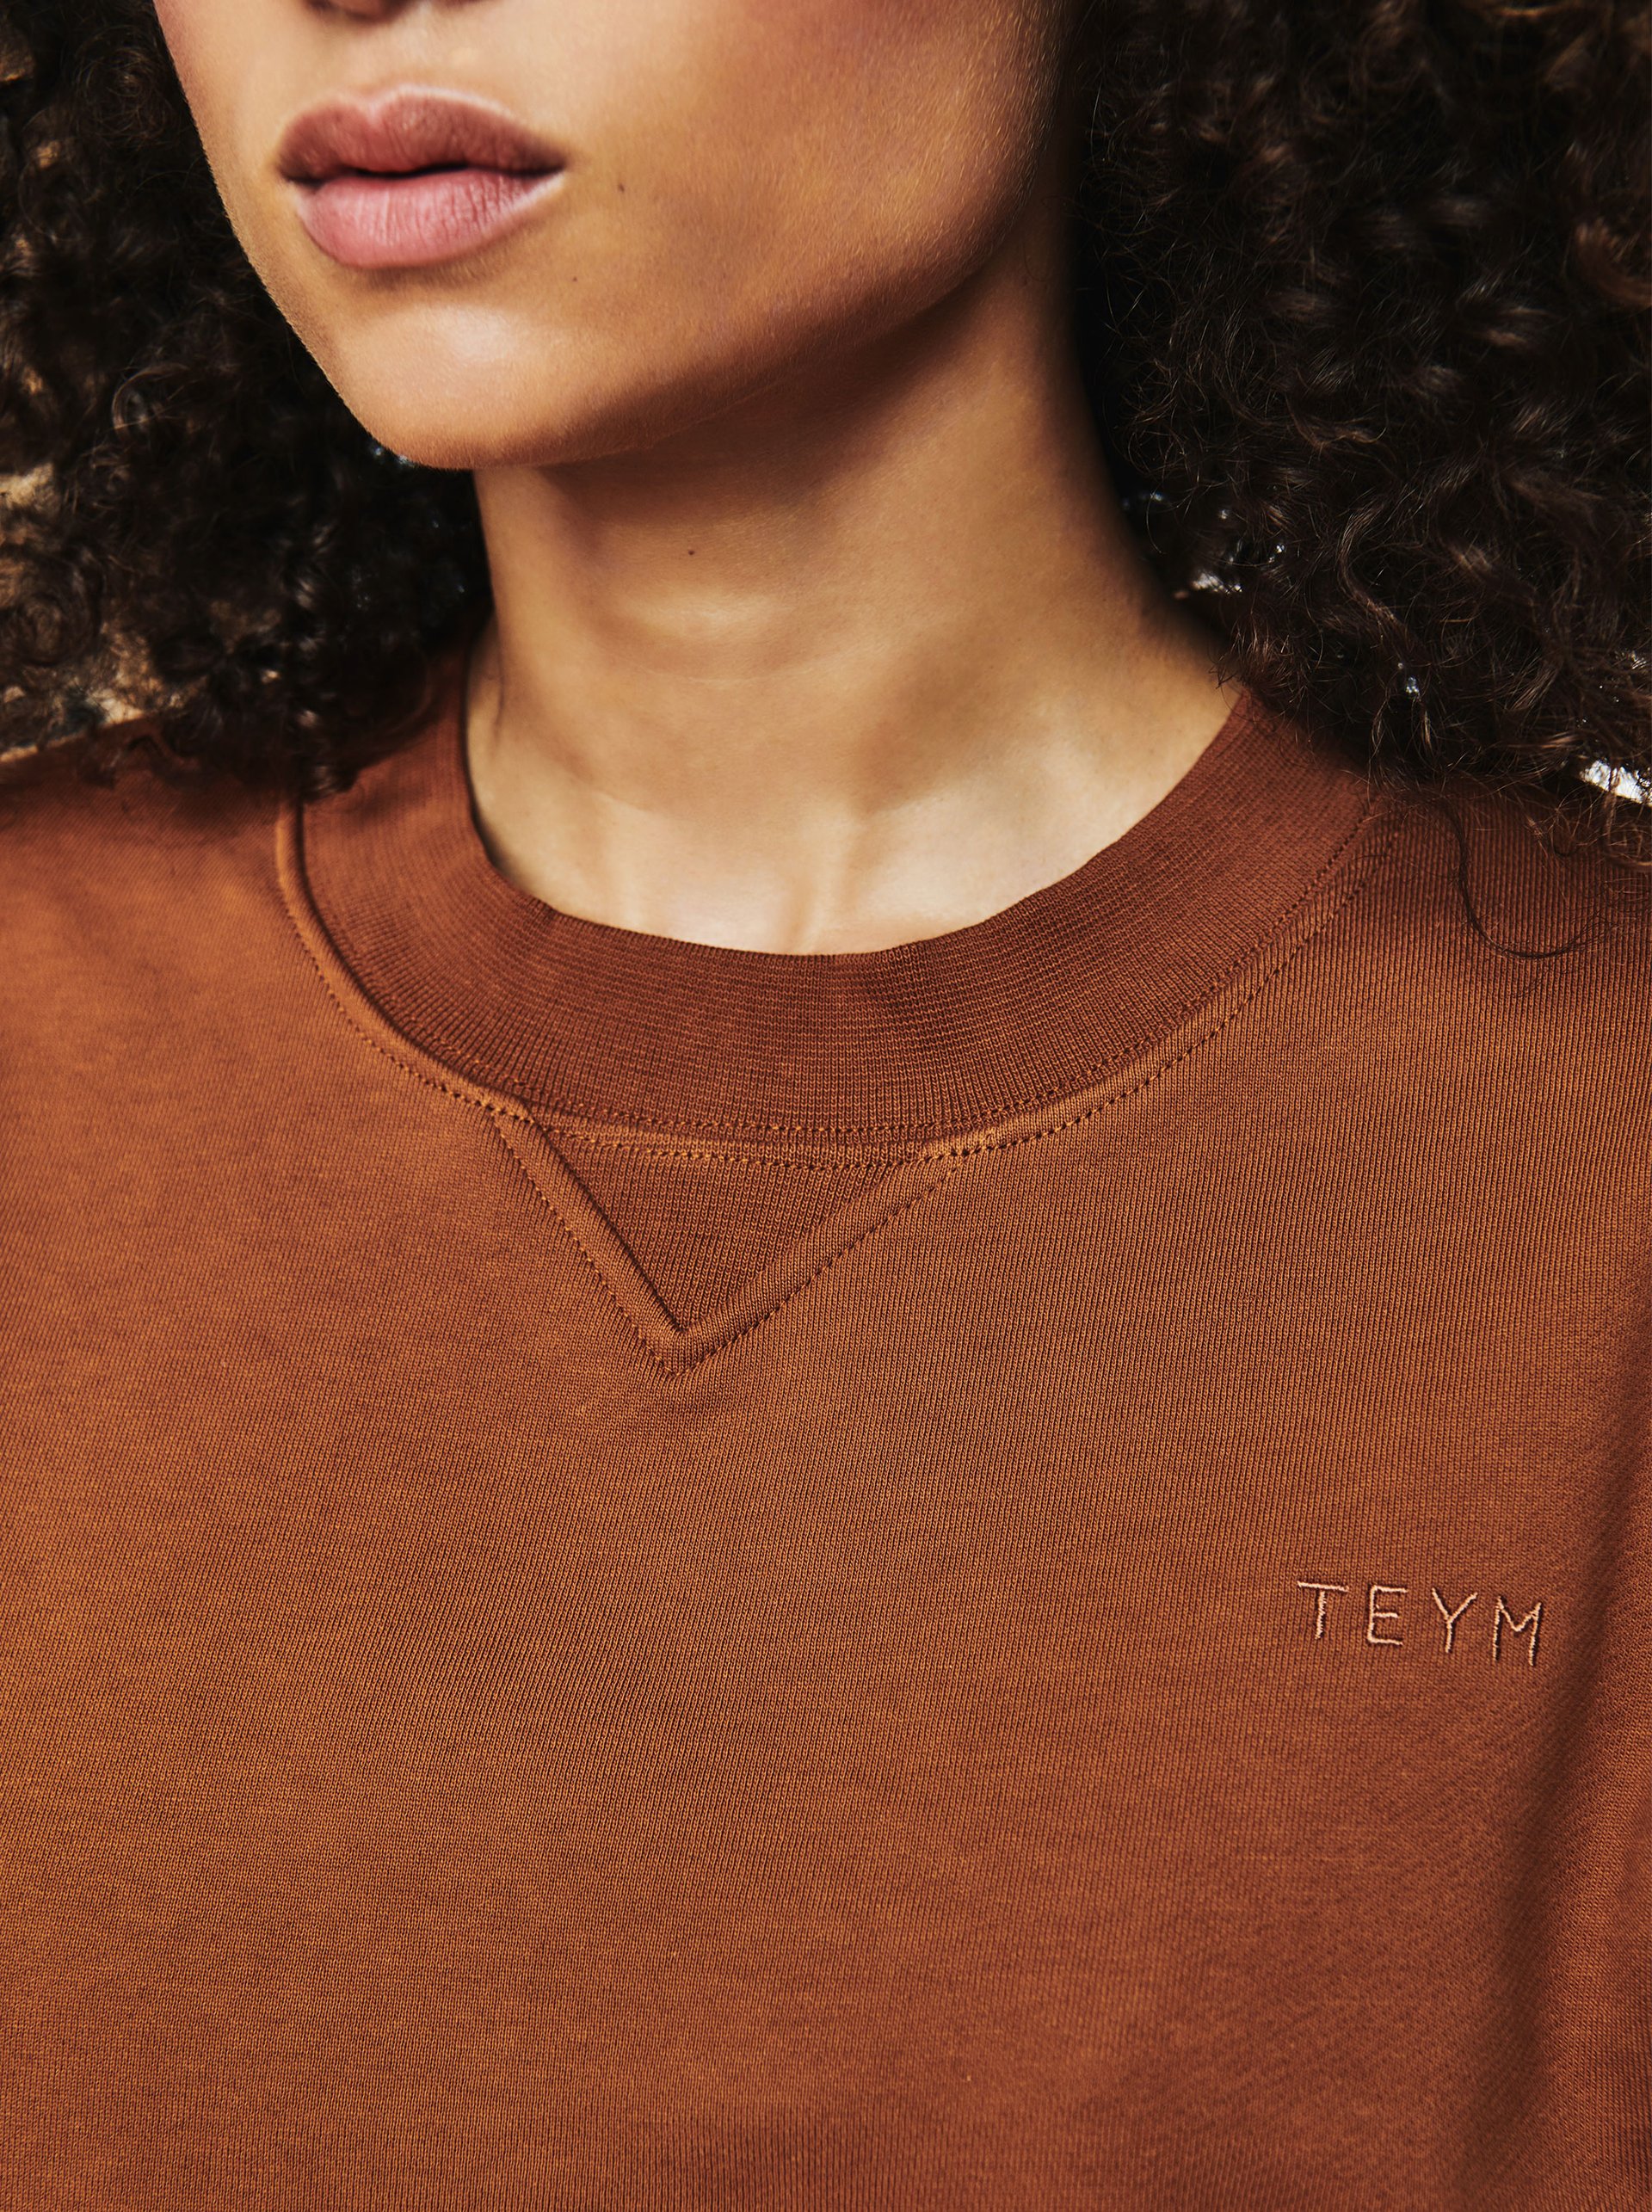 Teym-TheSweatshirt-Women-Camel02